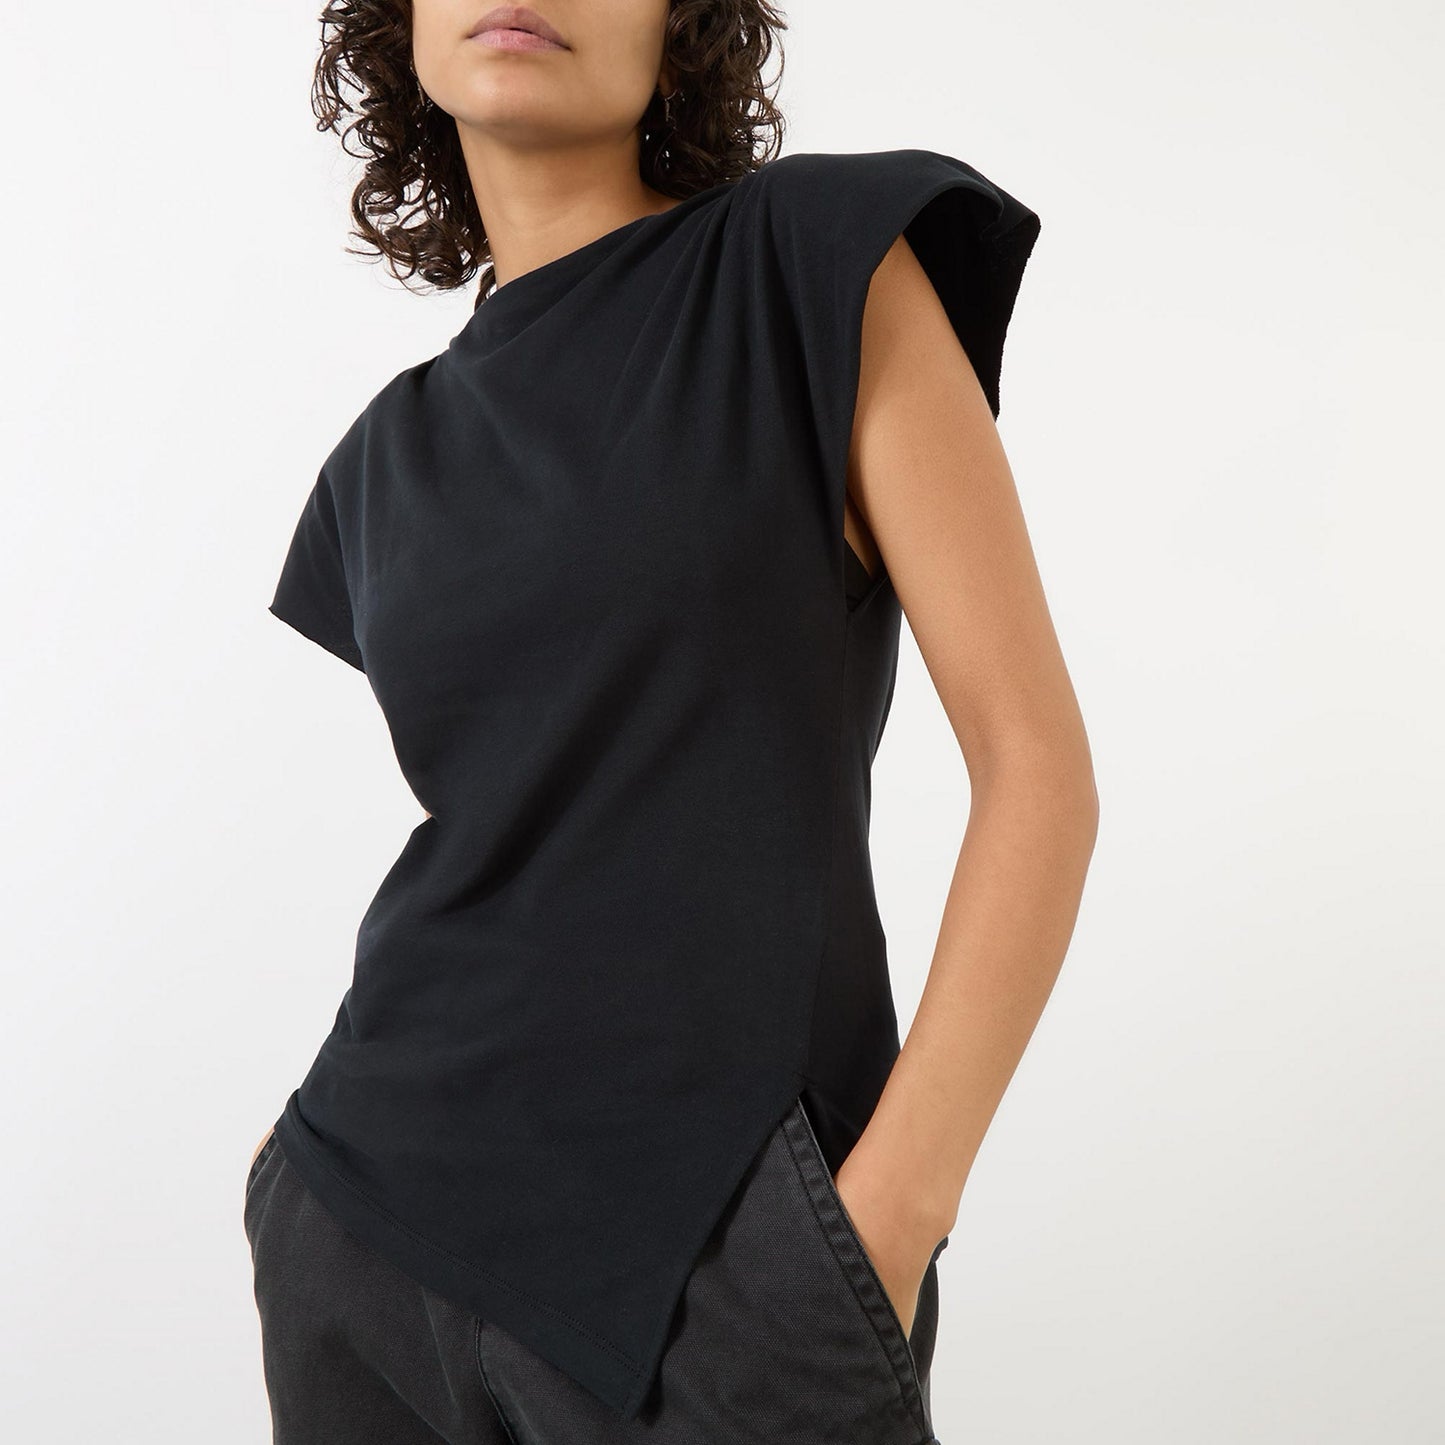 Isabel Marant Black "Sebani" Top, size Small